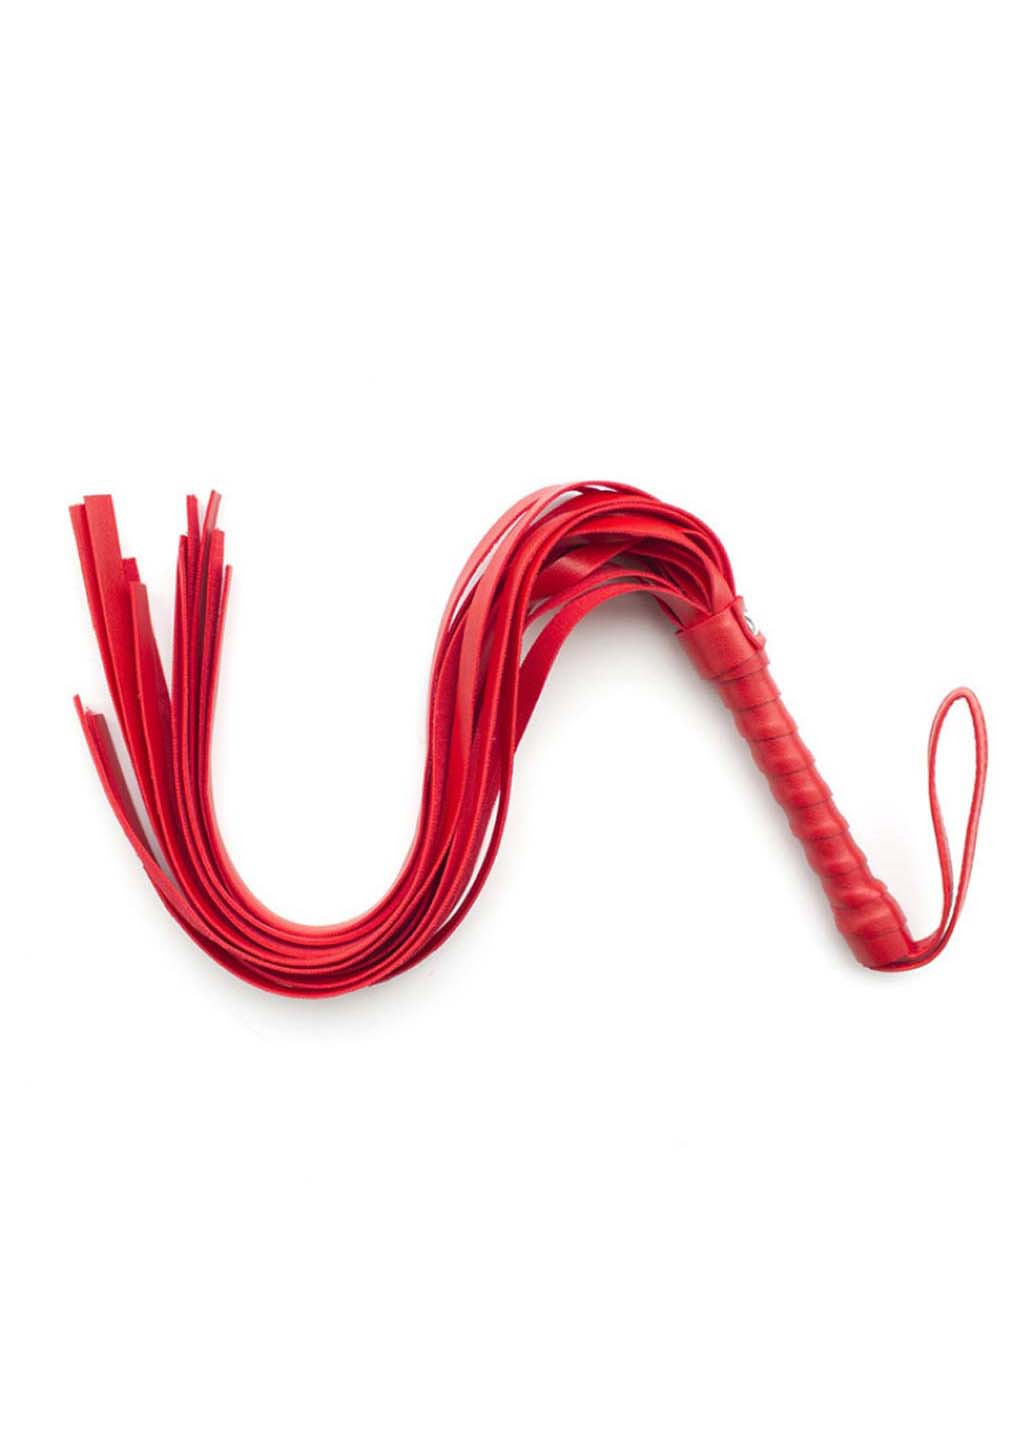 Плеть с рукояткой для ролевых игр Flirt Whip Bound Leather Red Bdsm4u (277229449)